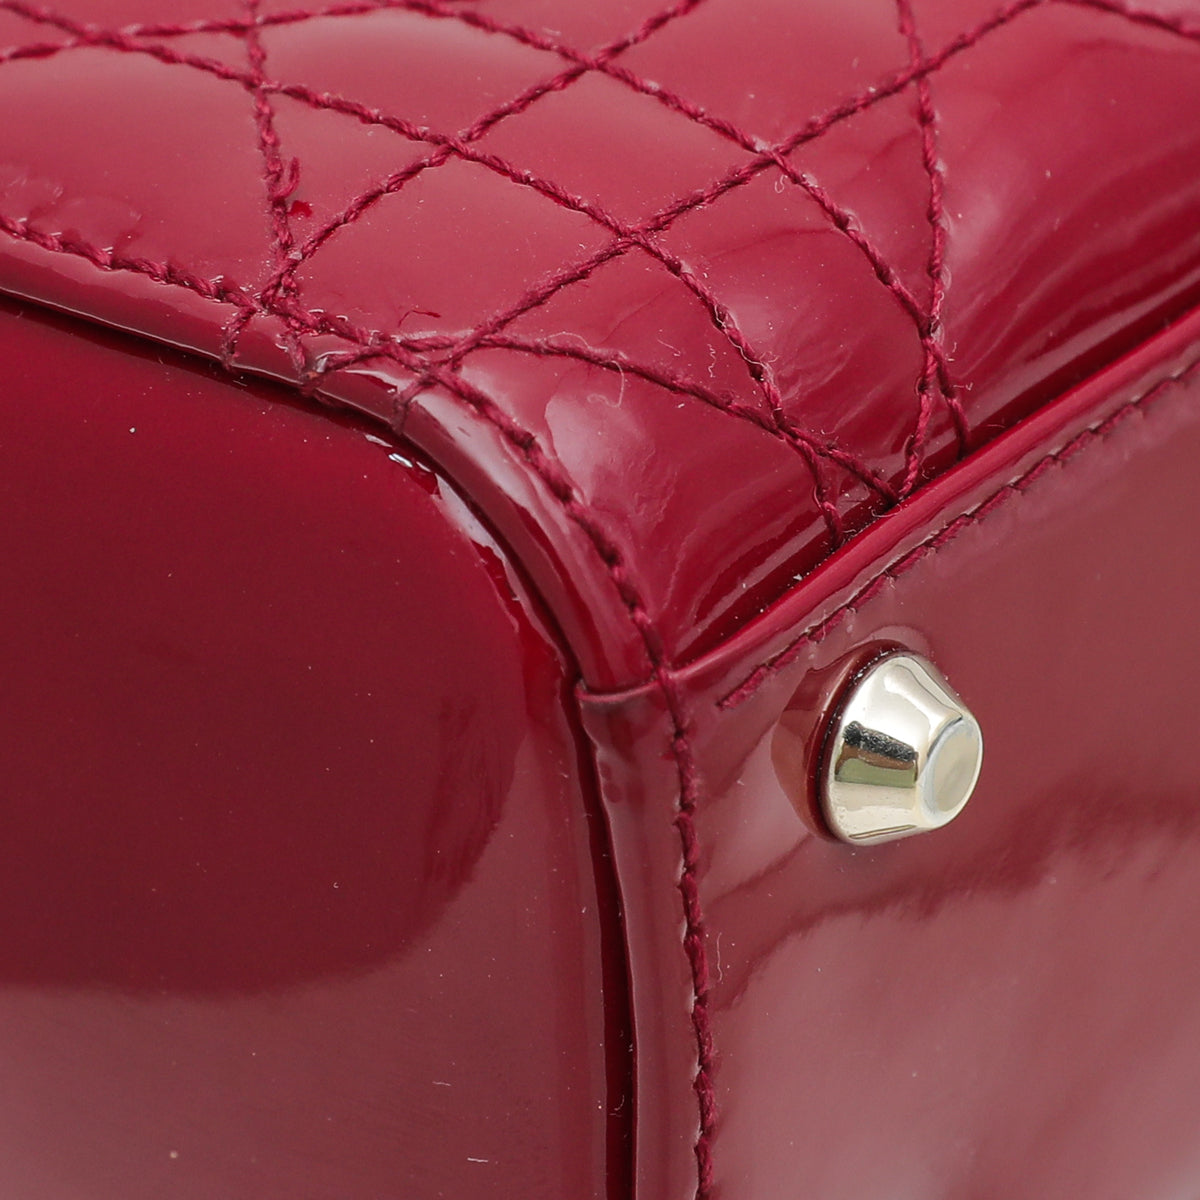 Christian Dior Cherry Red Lady Dior Mini Bag